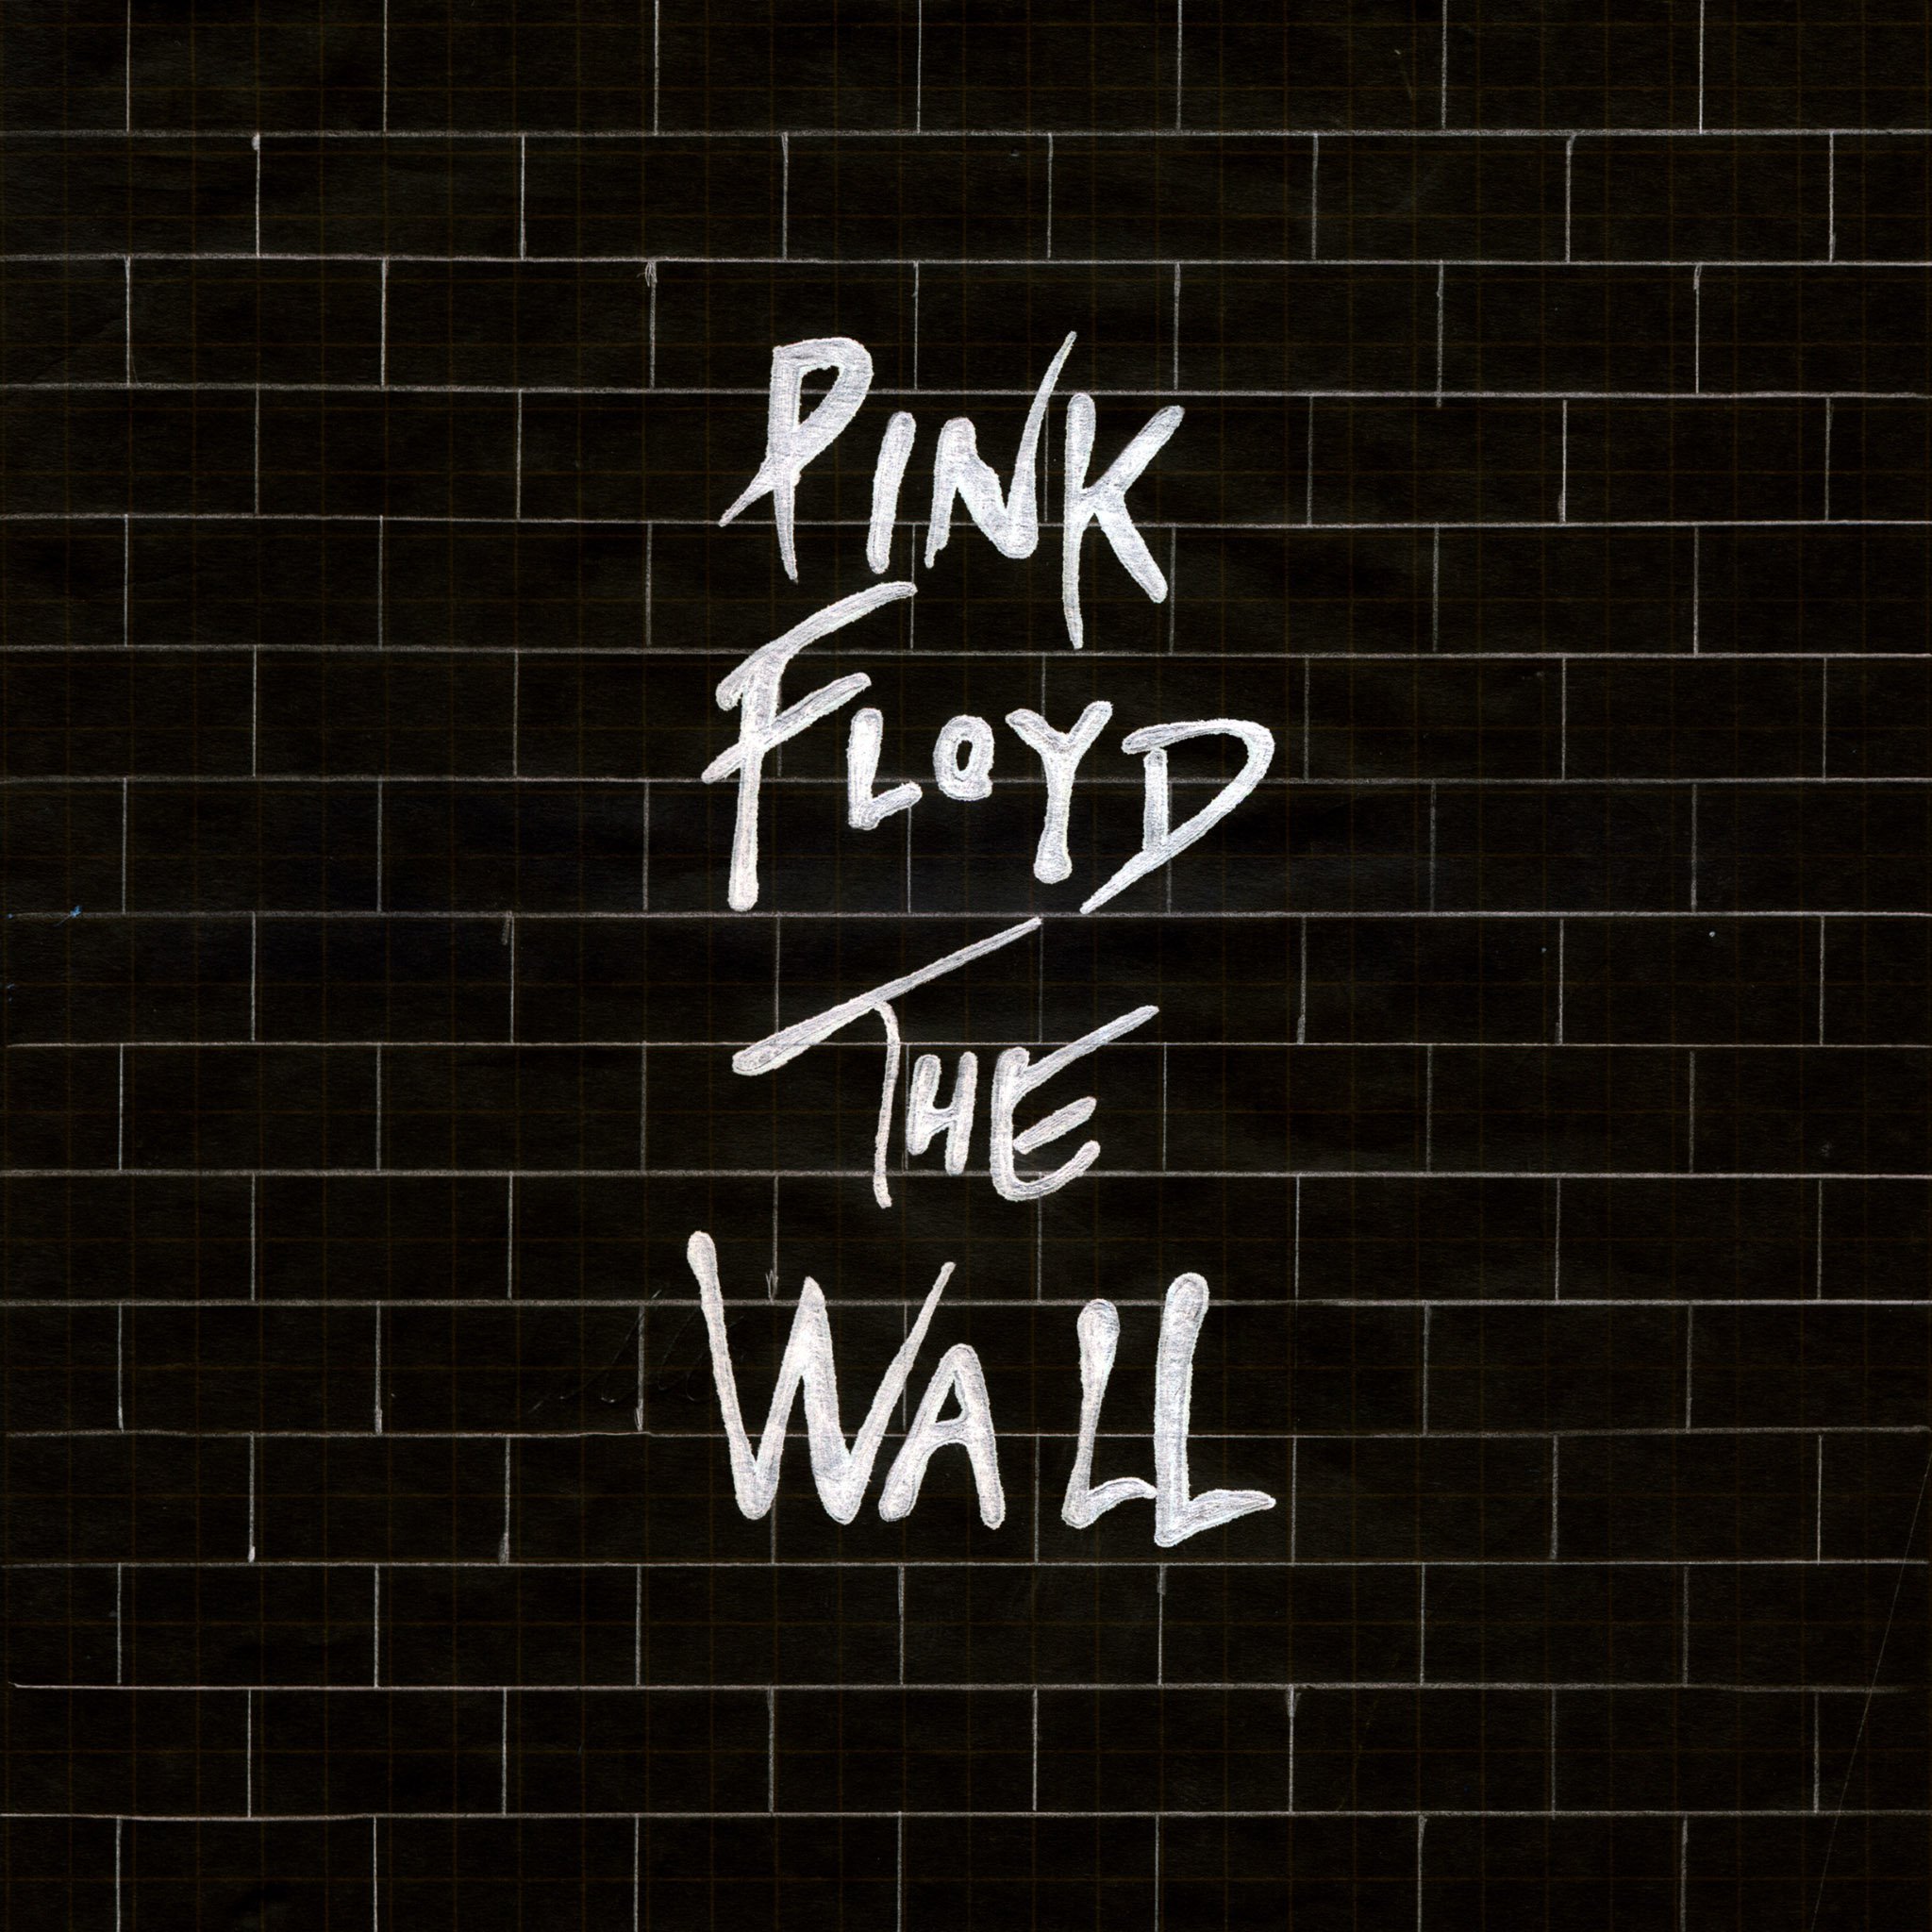  pink floyd the wall black parallax HD iPhone iPad wallpaper